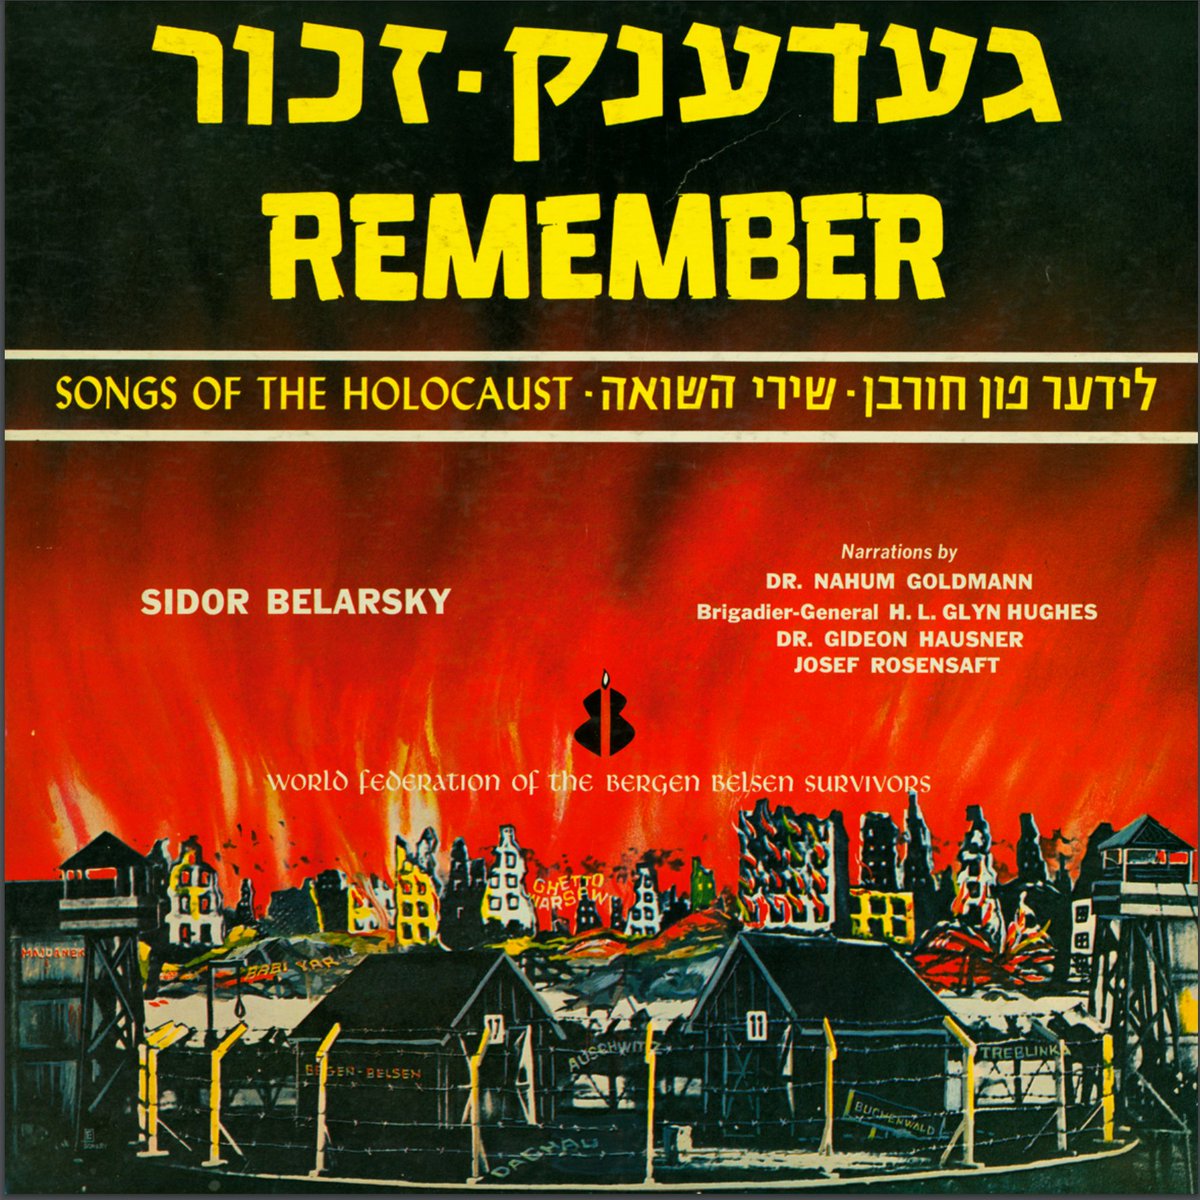 #VintageJewishAlbumArt Songs of the Holocaust - World Federation of Bergen Belsen Survivors